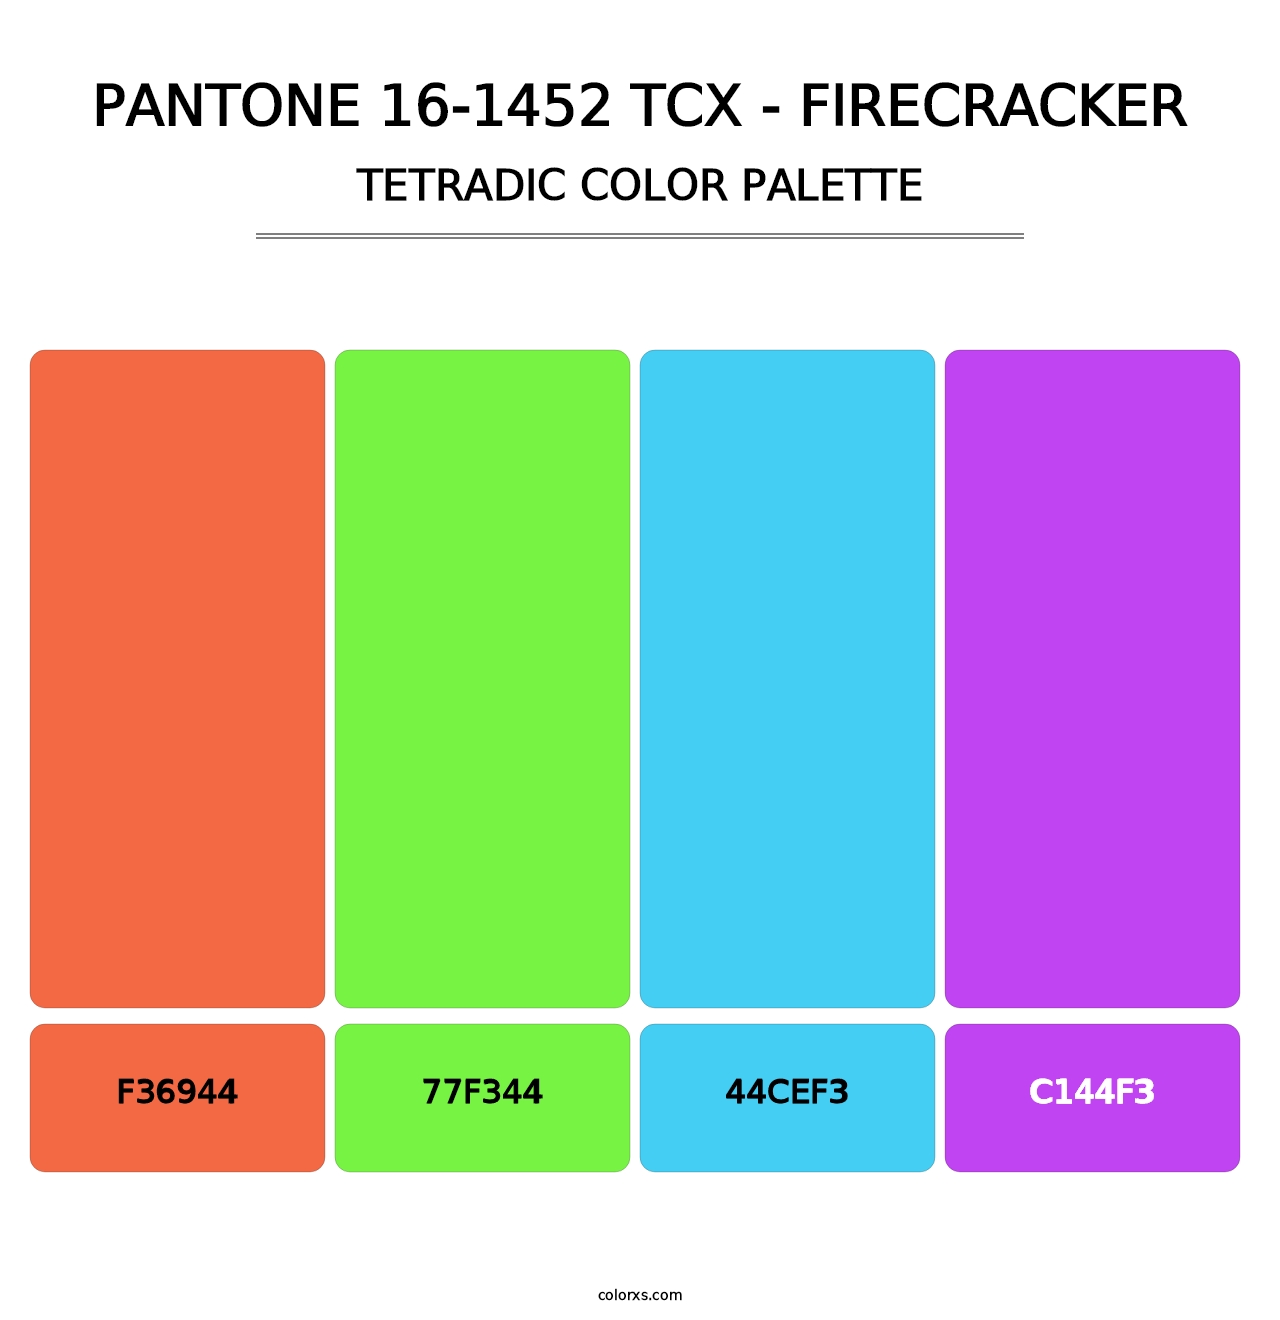 PANTONE 16-1452 TCX - Firecracker - Tetradic Color Palette